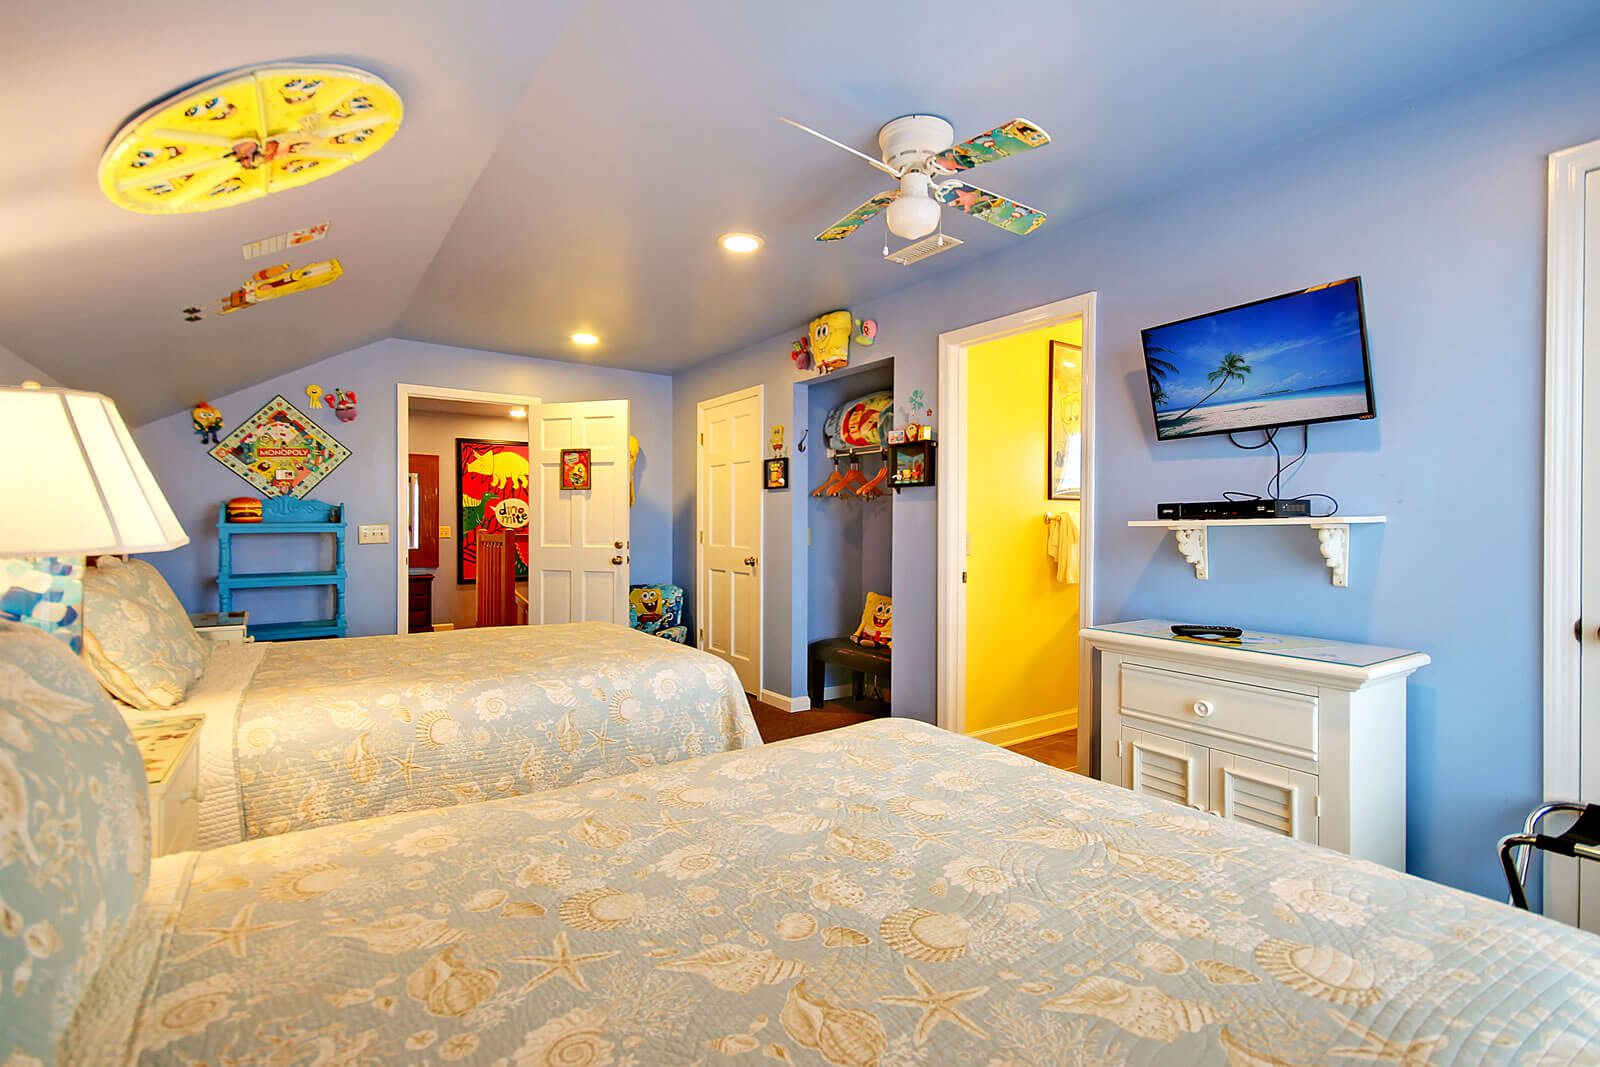 Casa Margarita Sponge Bob Bedroom Alternate View - Isle of Palms, SC